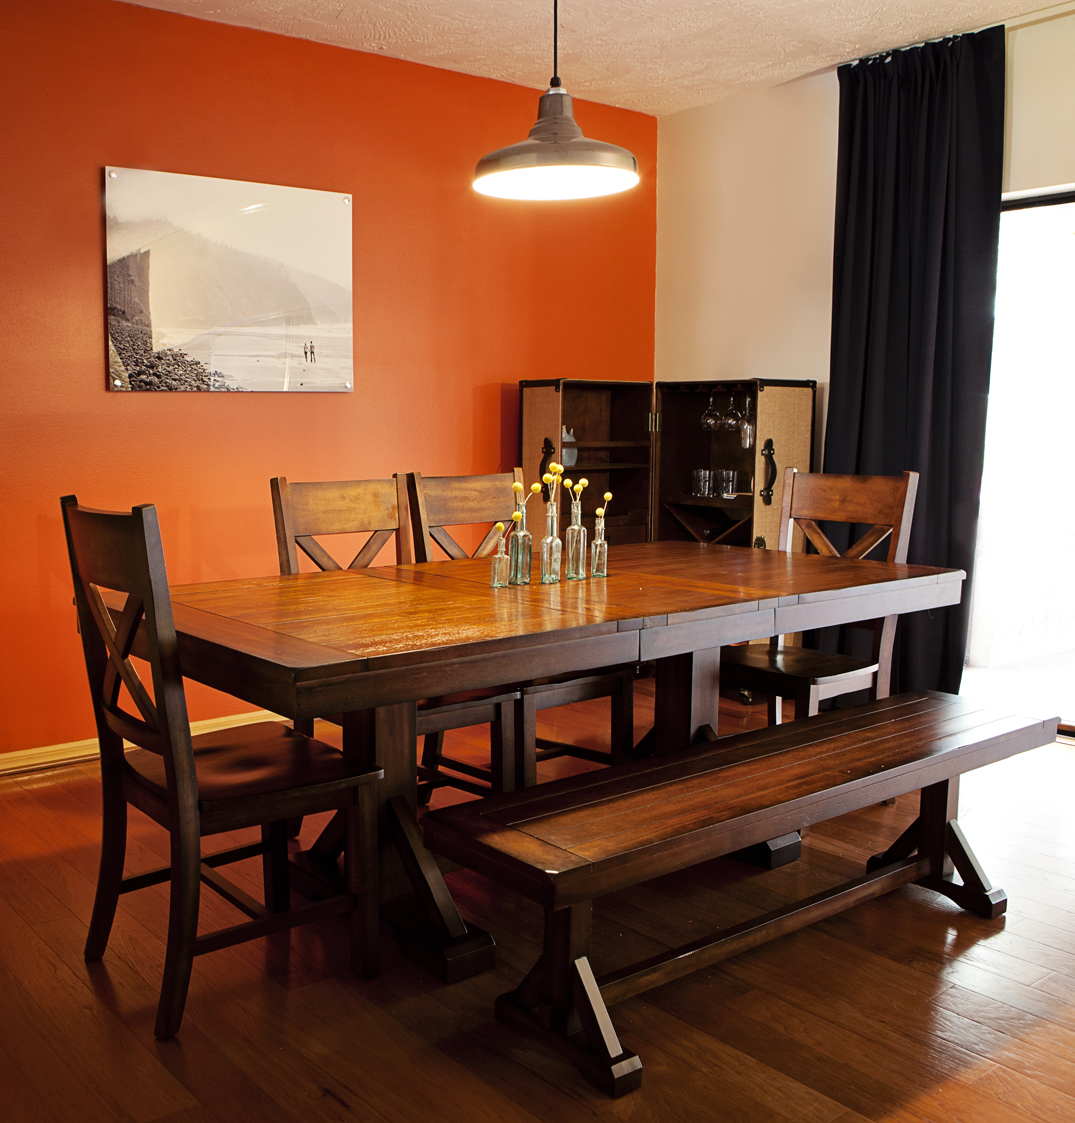 25 Midcentury Dining Room Design Ideas - Decoration Love